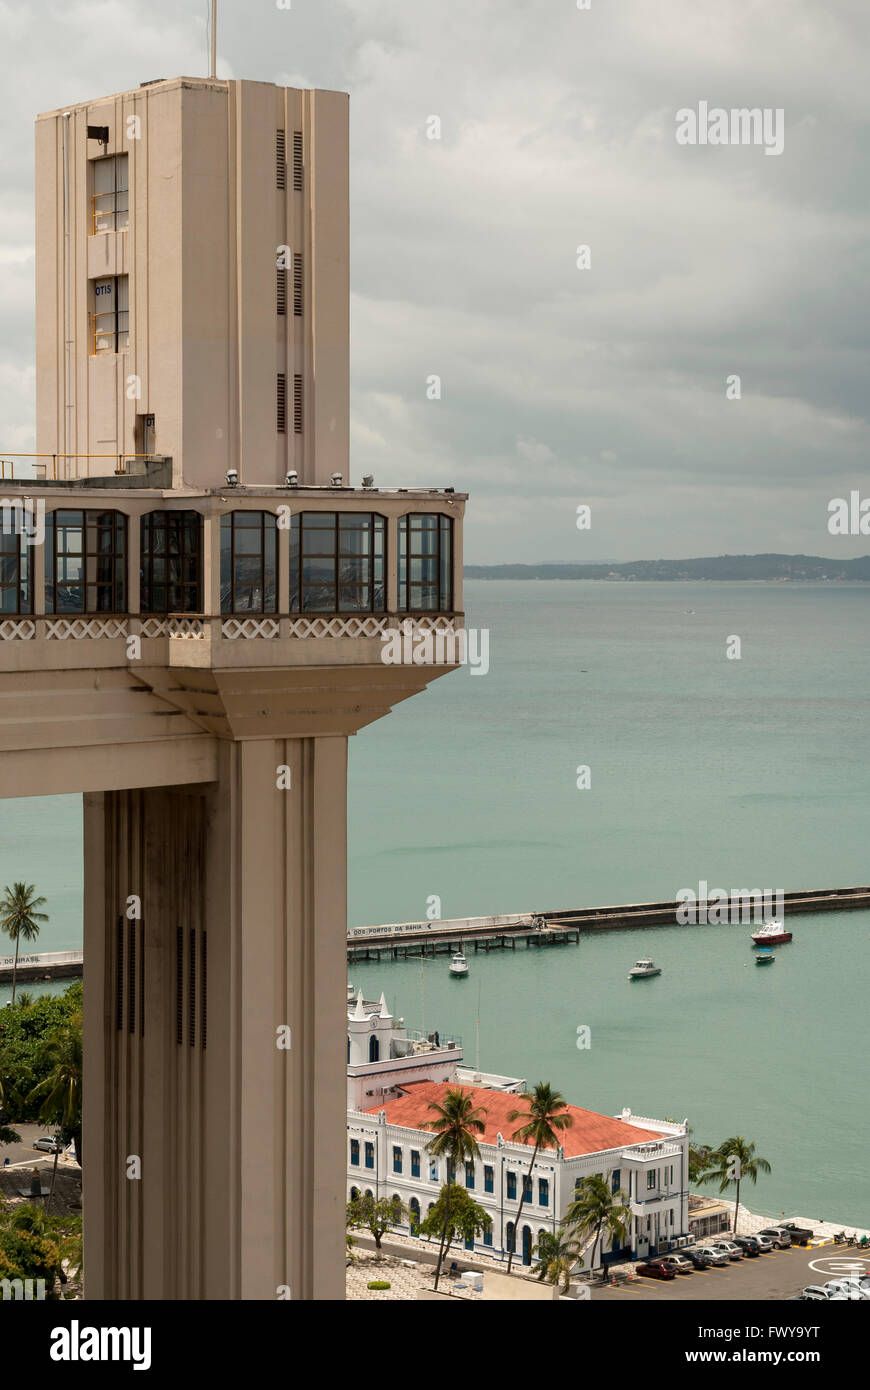 Elevador Lacerda (Lacerda elevator) with a view of the Baia de Todos os Santos (All Sants Bay) in the background, Salvador, Bahia, Brazil Stock Photo